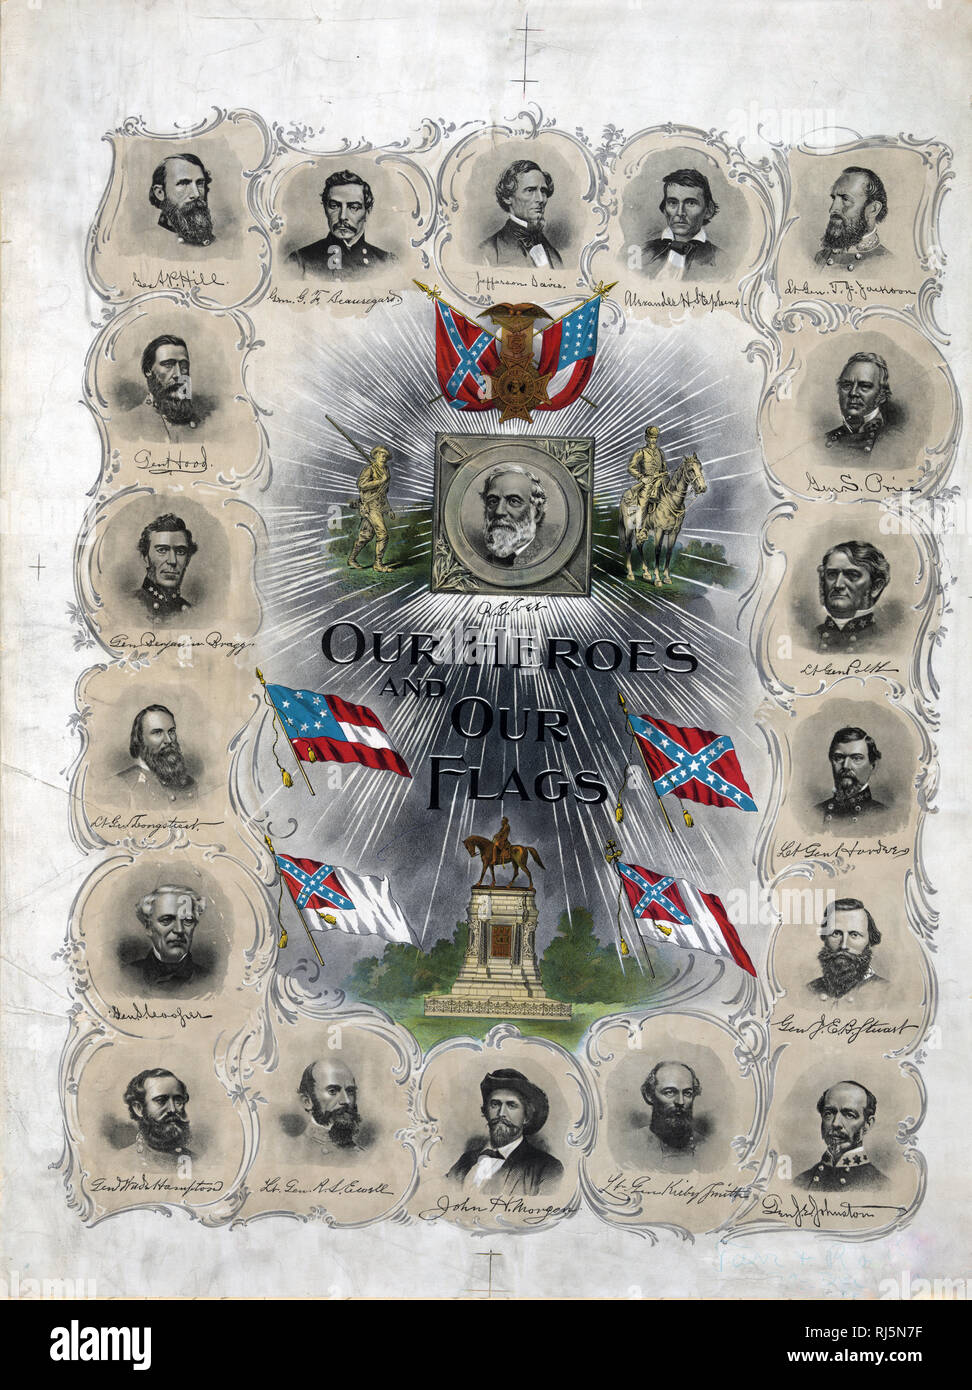 Memorial print for the Confederacy, published 30 years after the end of the American Civil War. Portraits, clockwise from top center, of 'Jefferson Davis, Alexander H. Stephens, Lt. Gen. T.J. [Stonewall] Jackson, Gen. S. Price, Lt. Gen. Polk, Lt. Gen. Hardee, Gen J.E.B. Stuart, Gen. J.E. Johnston, Lt. Gen. Kirby Smith, John H. Morgan, Lt. Gen. R.S. Ewell, Gen. Wade Hampton, Gen. S. Cooper, Lt. Gen. Longstreet, Gen. Benjamin [i.e., Braxton] Bragg, Gen. Hood, Gen. A.P. Hill, [and] Gen. G.F. [i.e., G.T.] Beauregard,' surround the central image of Robert E. Lee, an equestrian statue, and four Conf Stock Photo